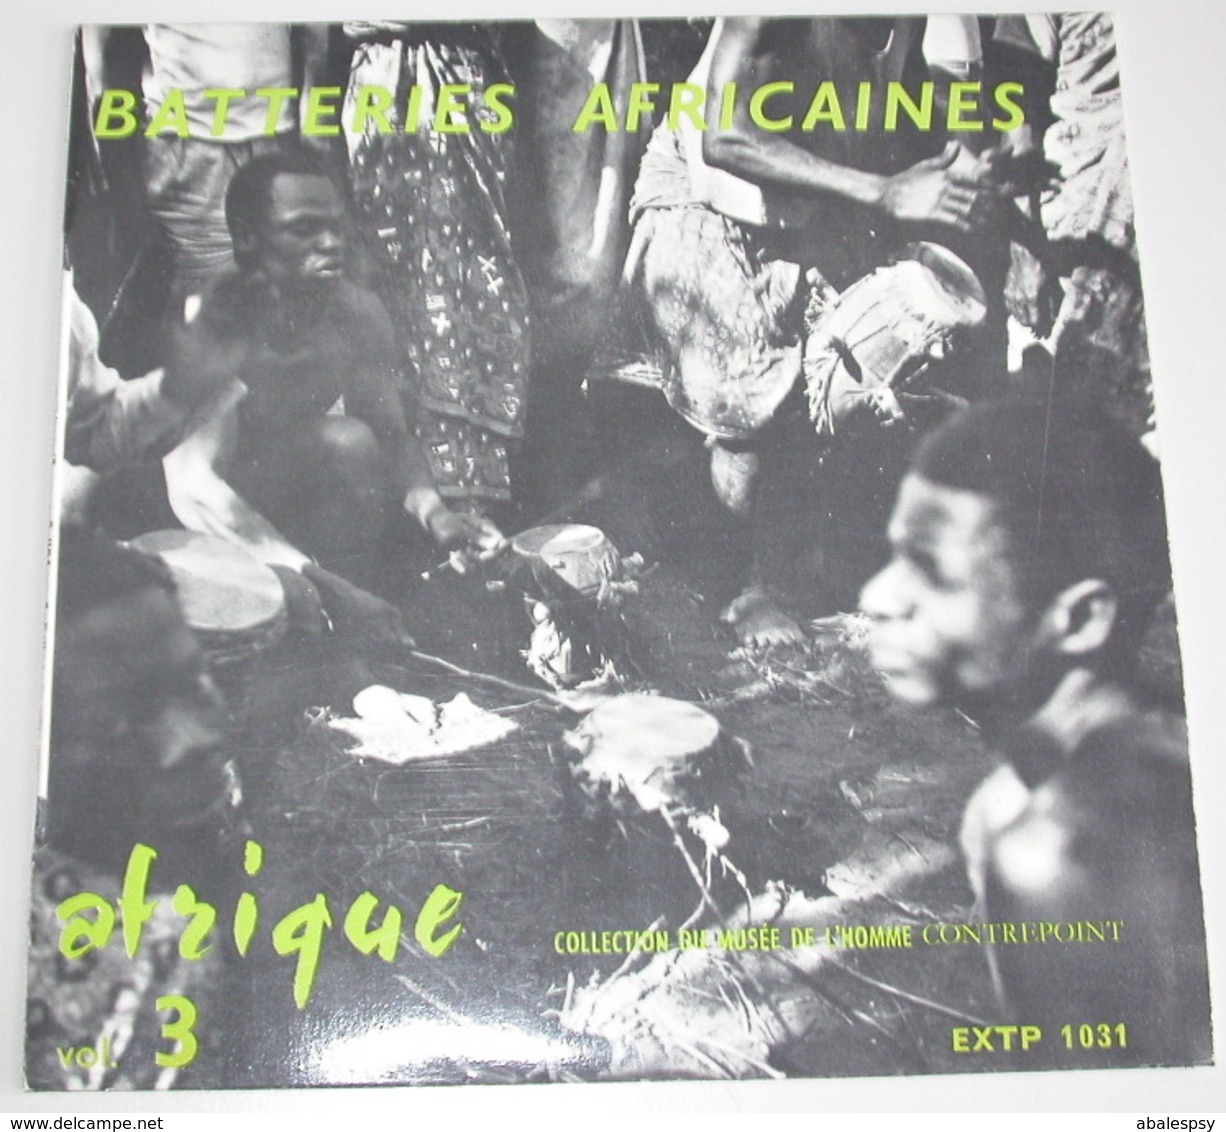 Batteries Africaines 45t EP Vol. 3 Vogue Extp 1031France)  NM M - World Music